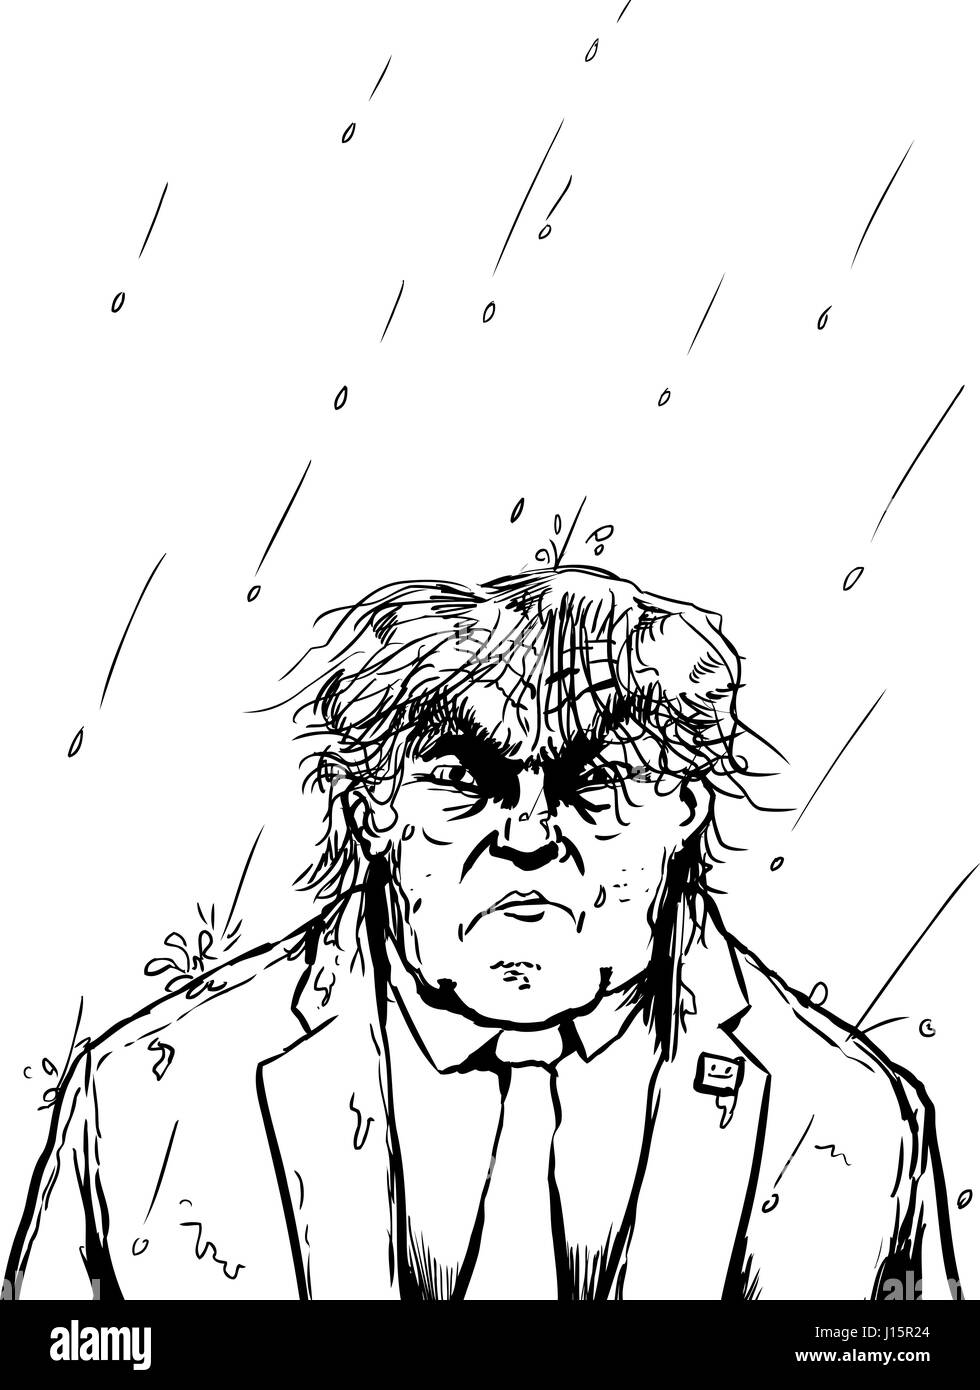 April 18, 2017. Outline cartoon of soaking wet Donald Trump in rain storm Stock Photo